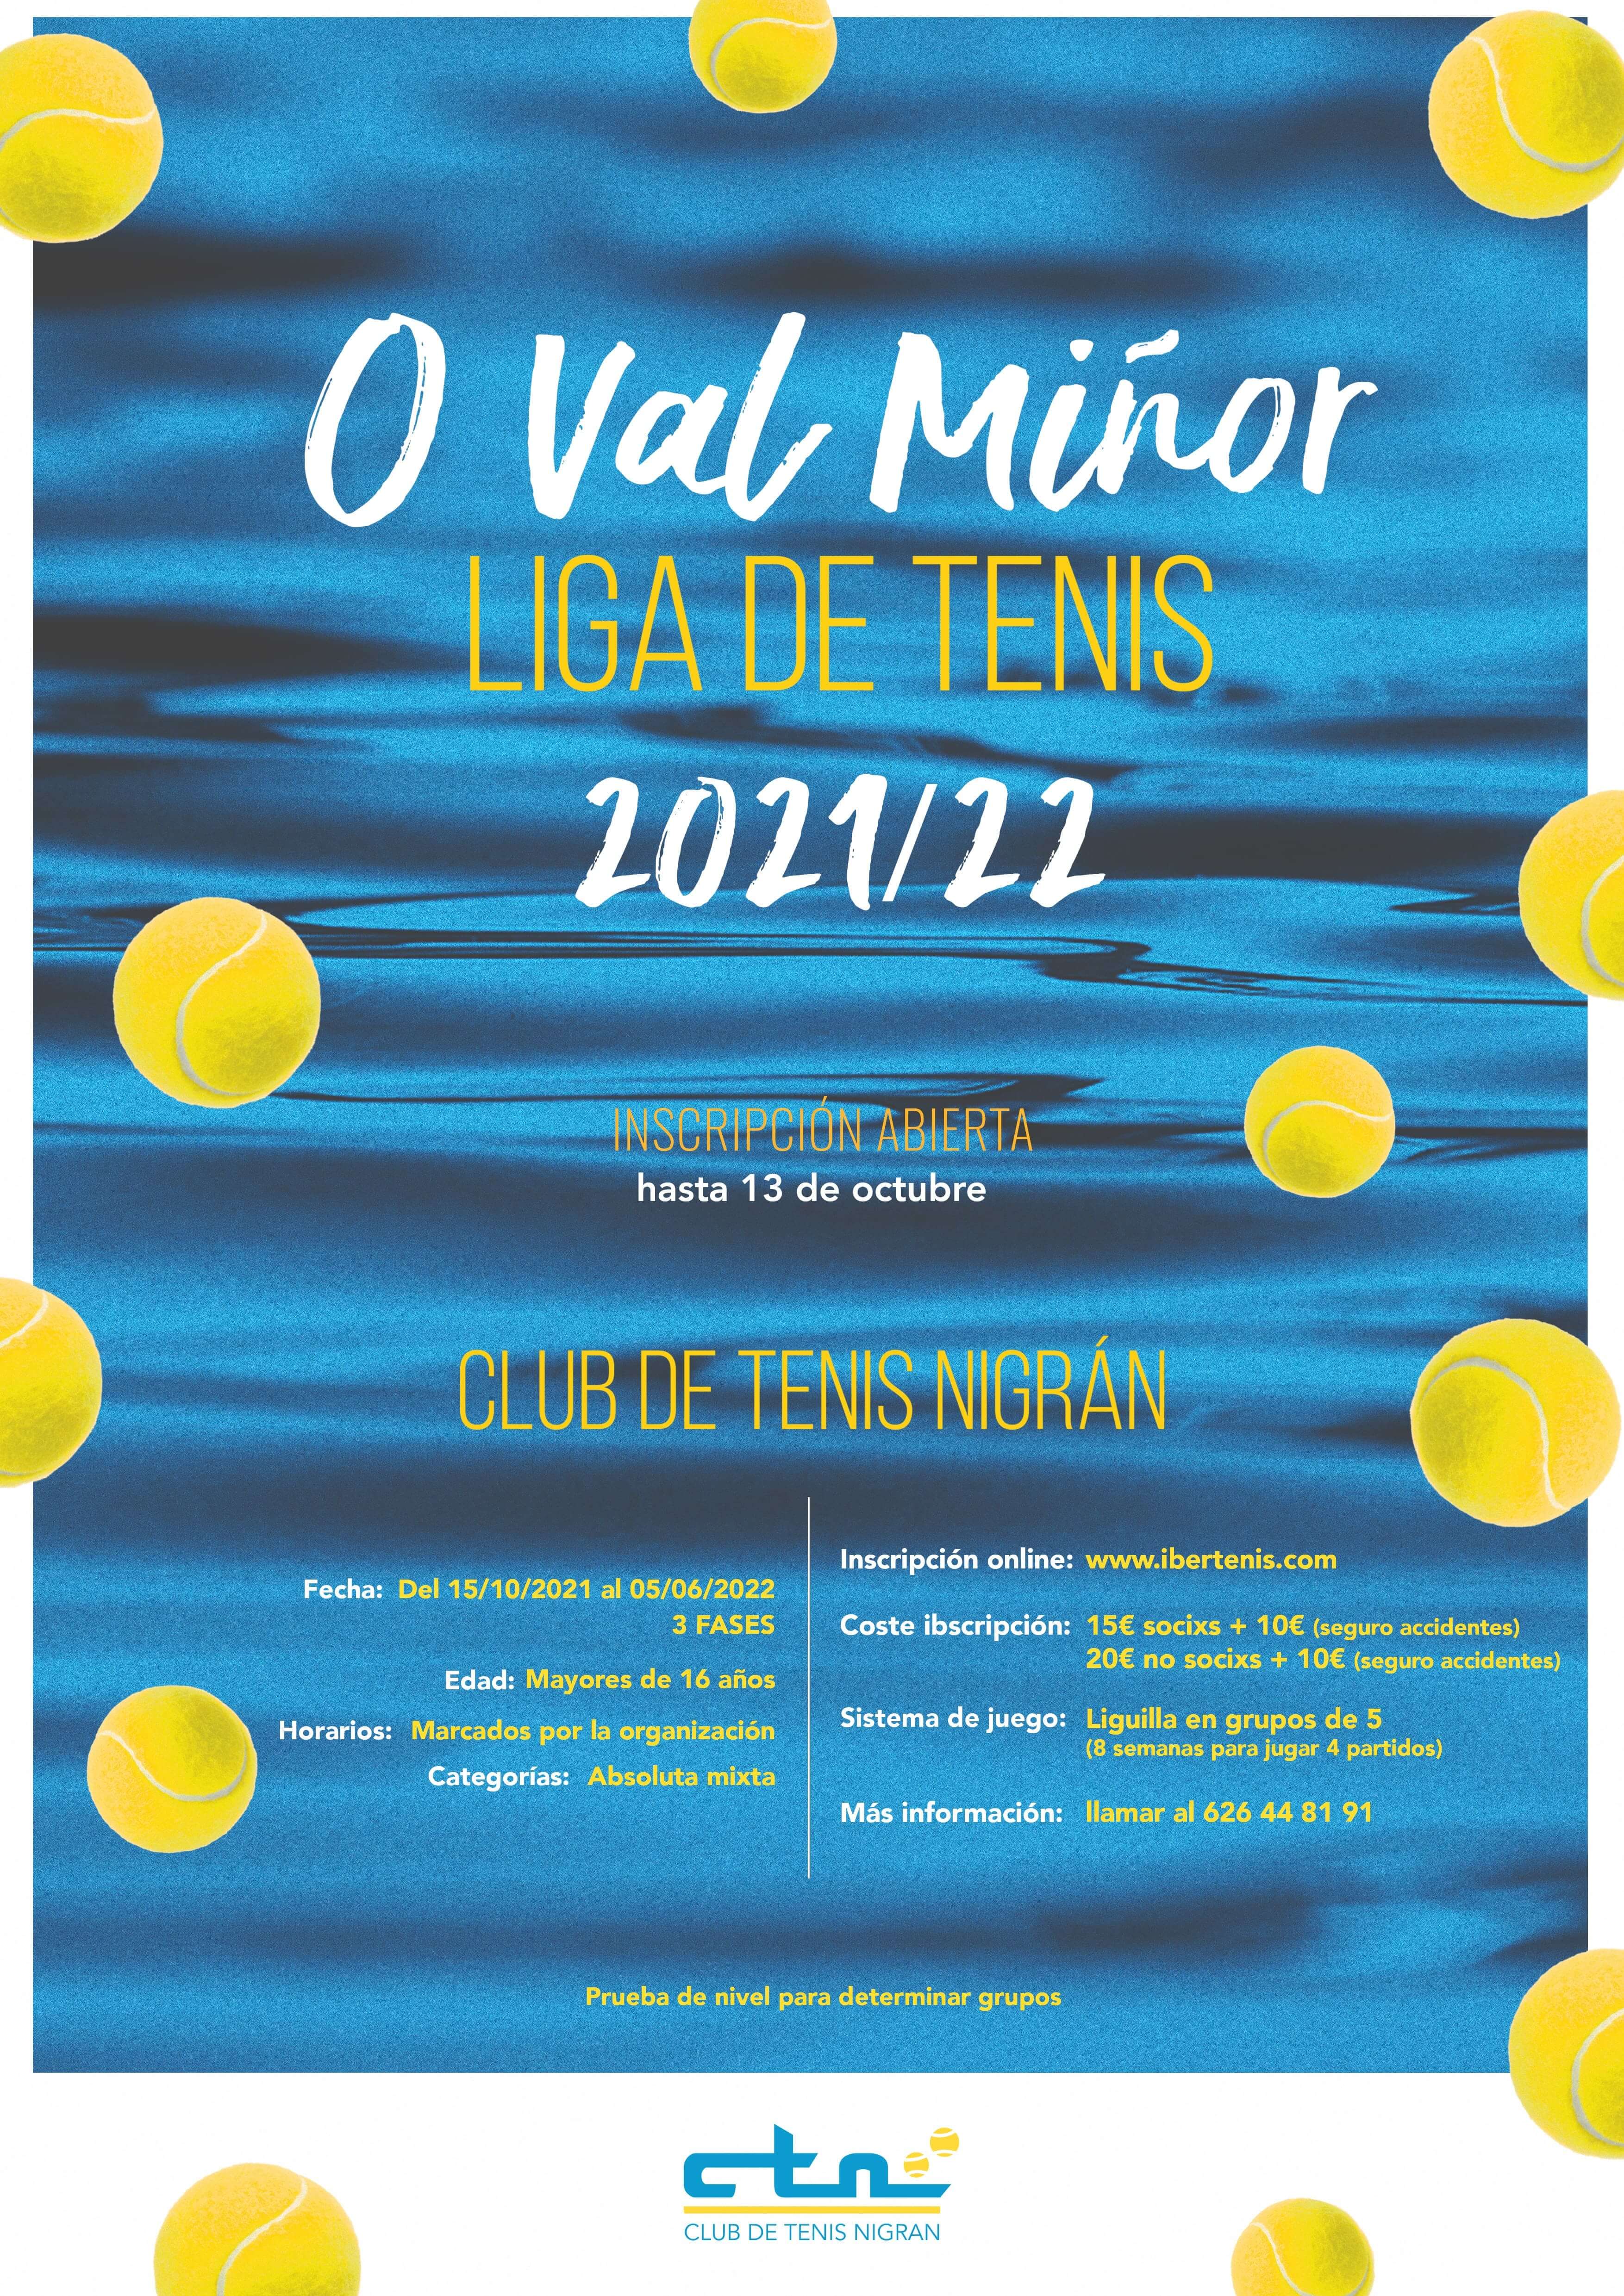 Liga de Tenis "O Val Miñor" 2021/22